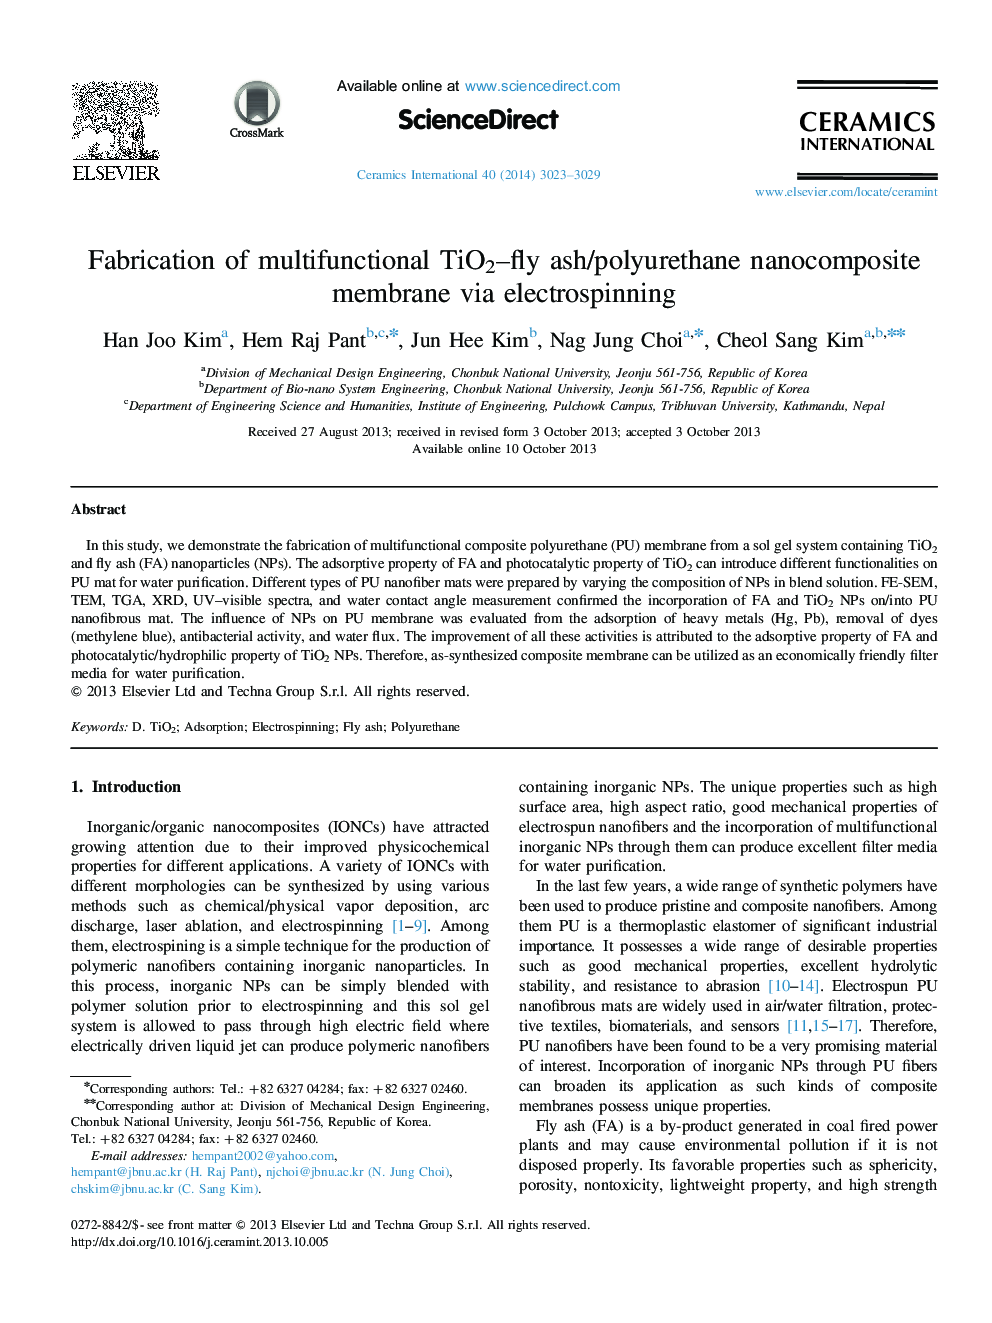 Fabrication of multifunctional TiO2–fly ash/polyurethane nanocomposite membrane via electrospinning